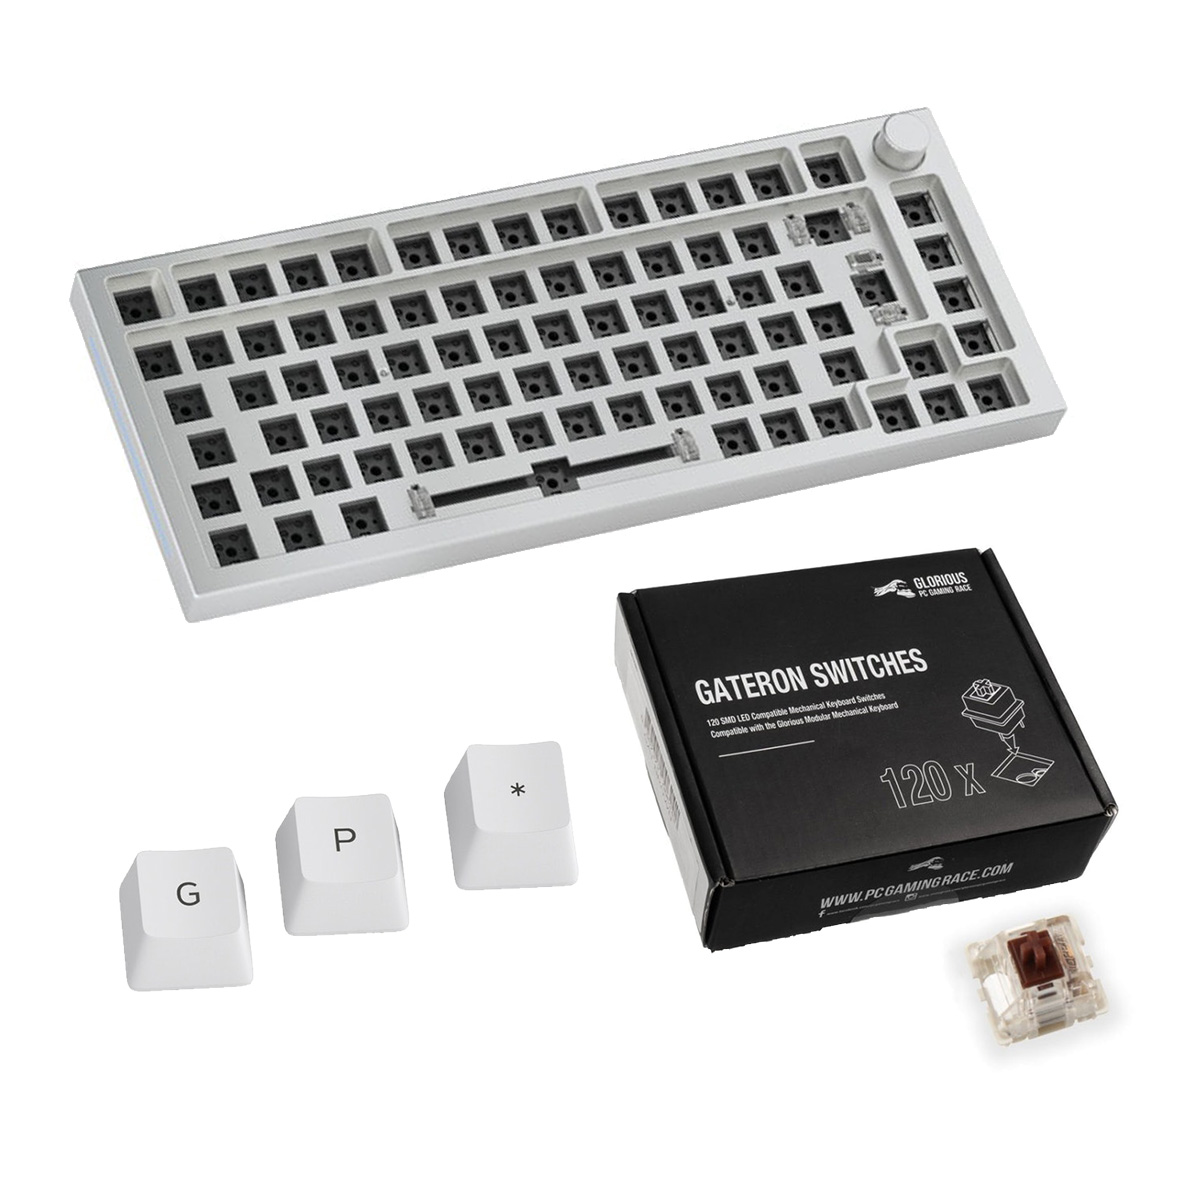 Glorious - Glorious GMMK Pro 75% Gaming Keyboard Epic Discount Bundle - White Frame